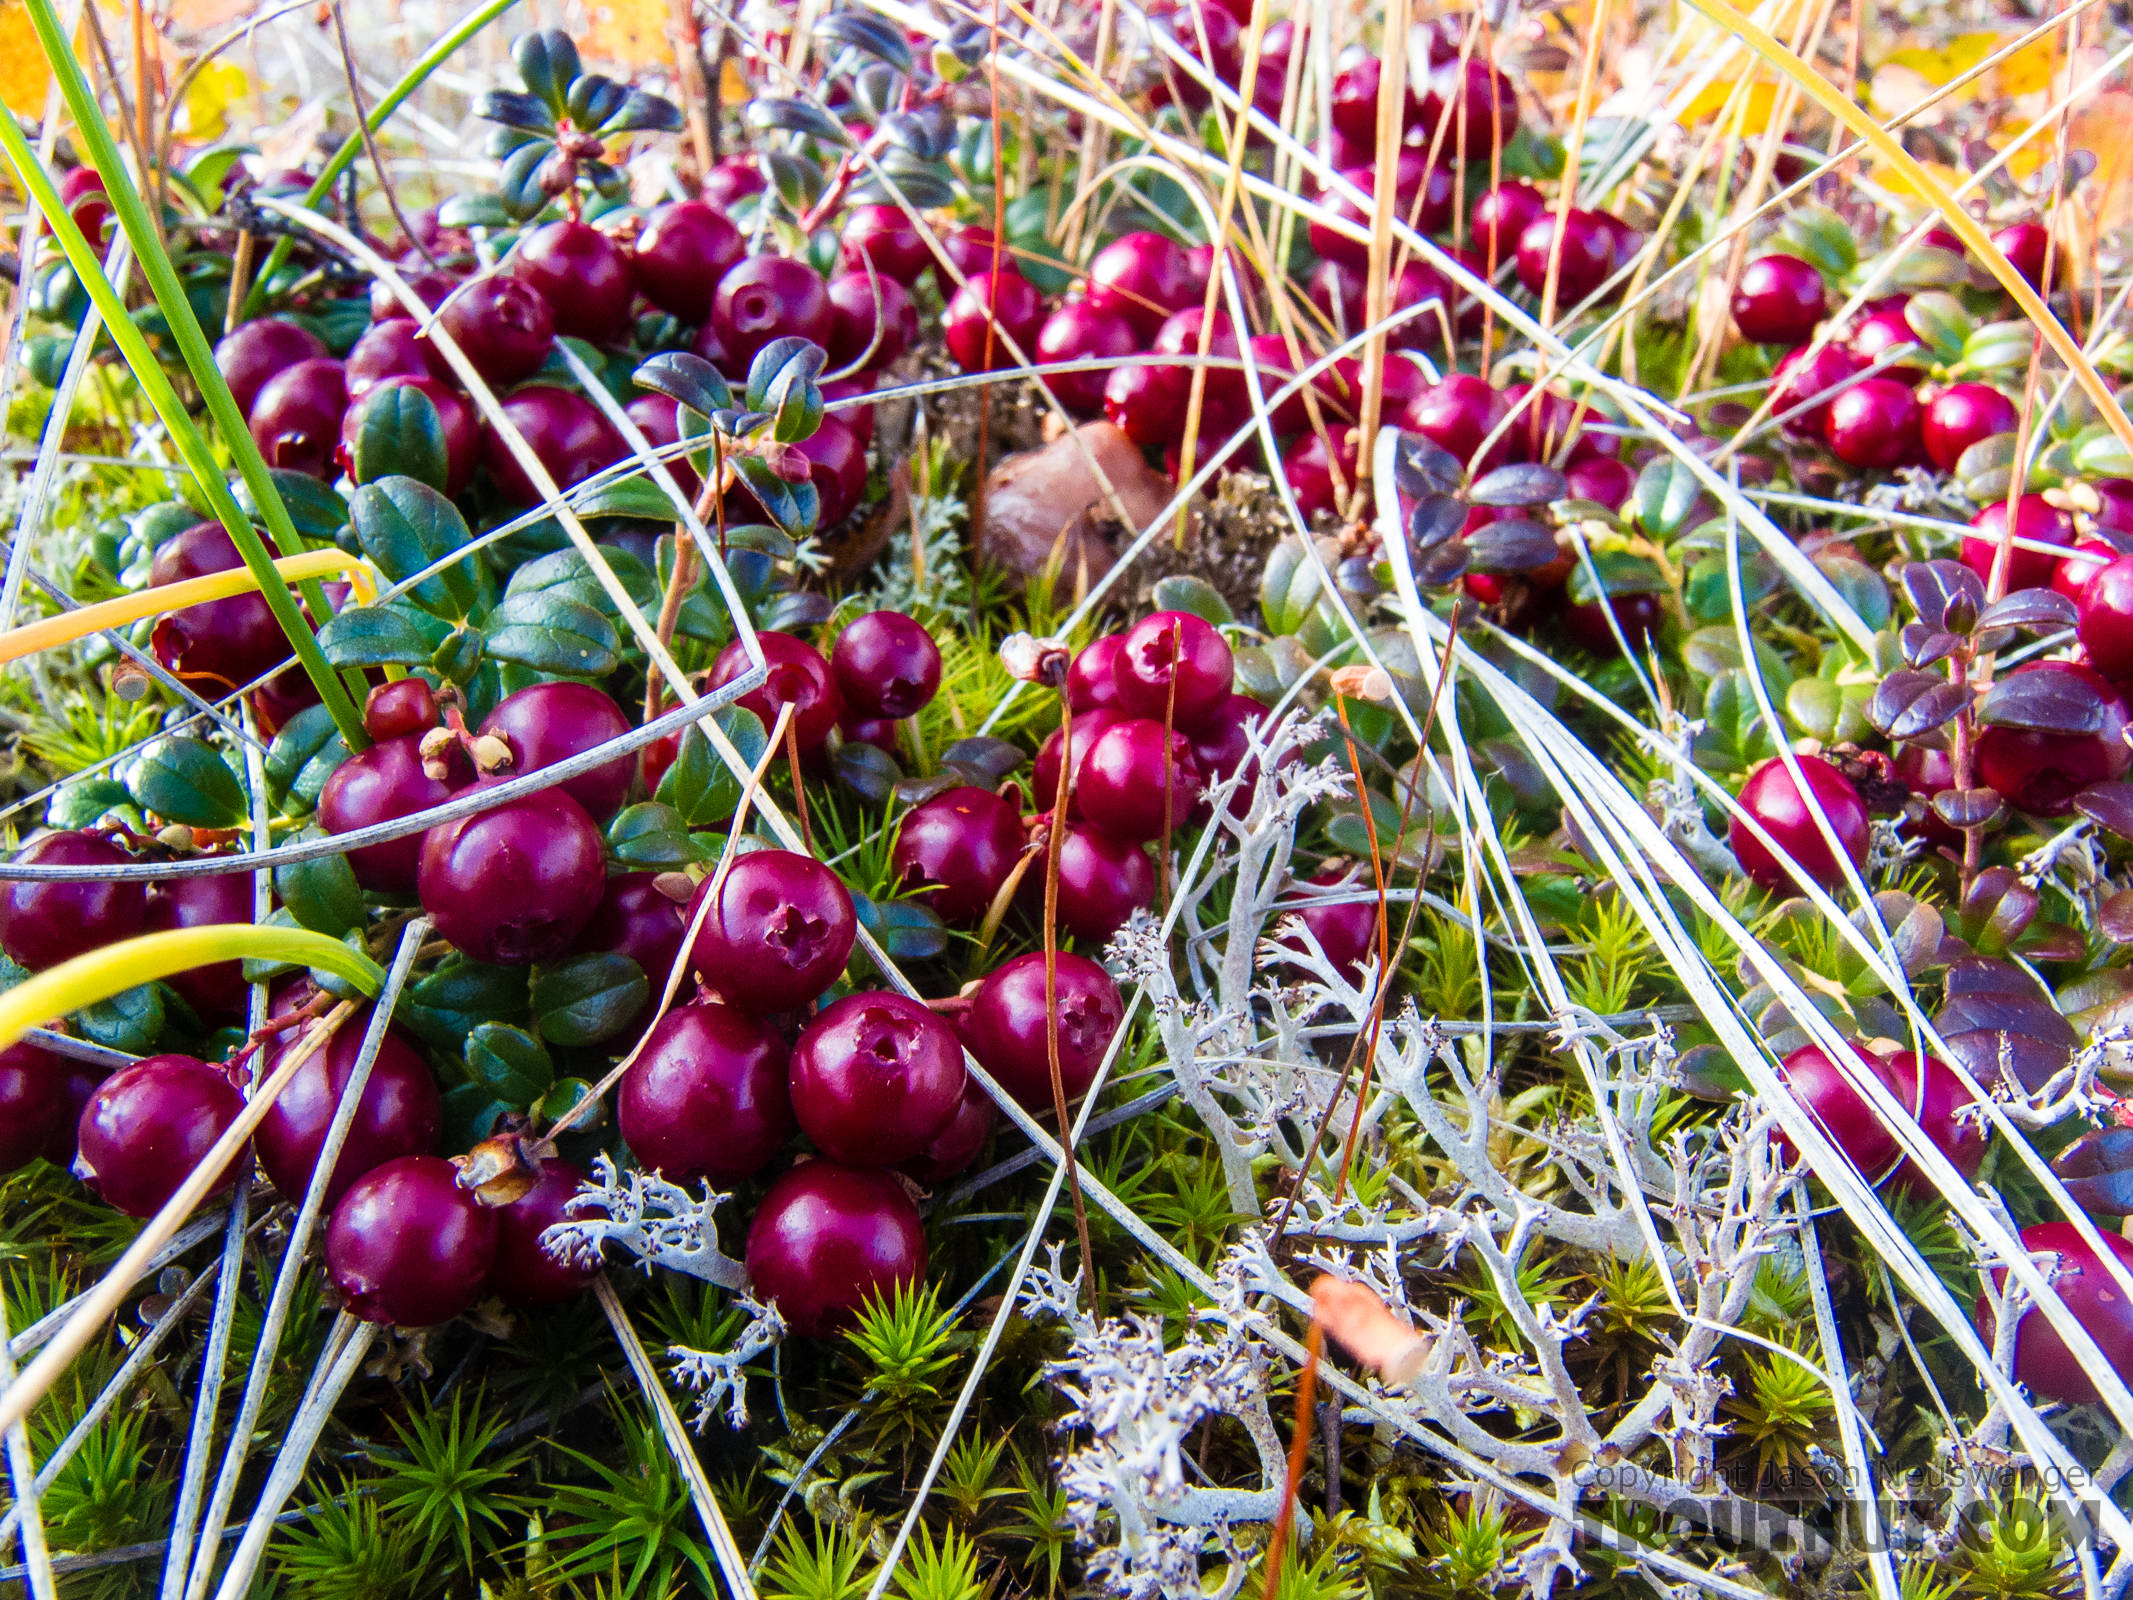 Lingonberries (low-bush cranberries) From Murphy Dome in Alaska.